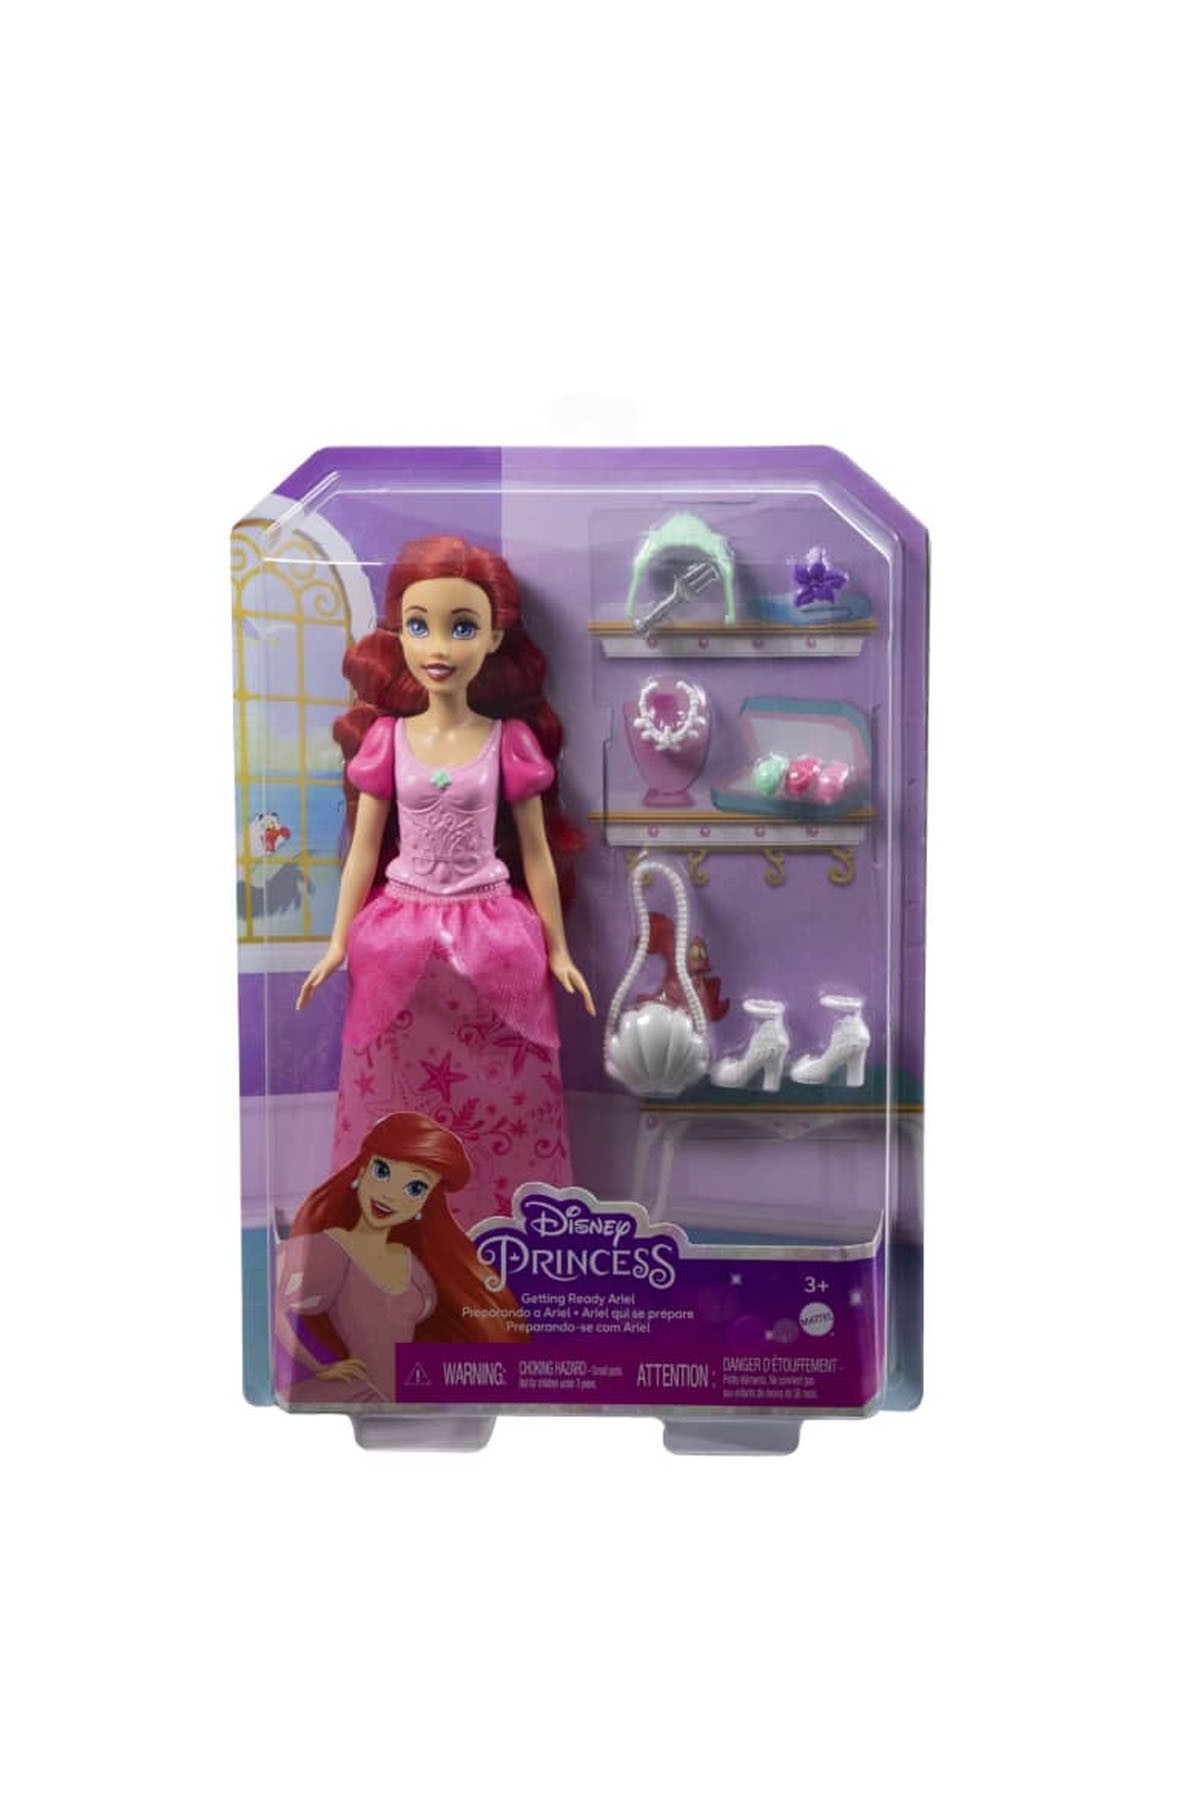 Disney Prenses Ariel ve Aksesuarları HLX34